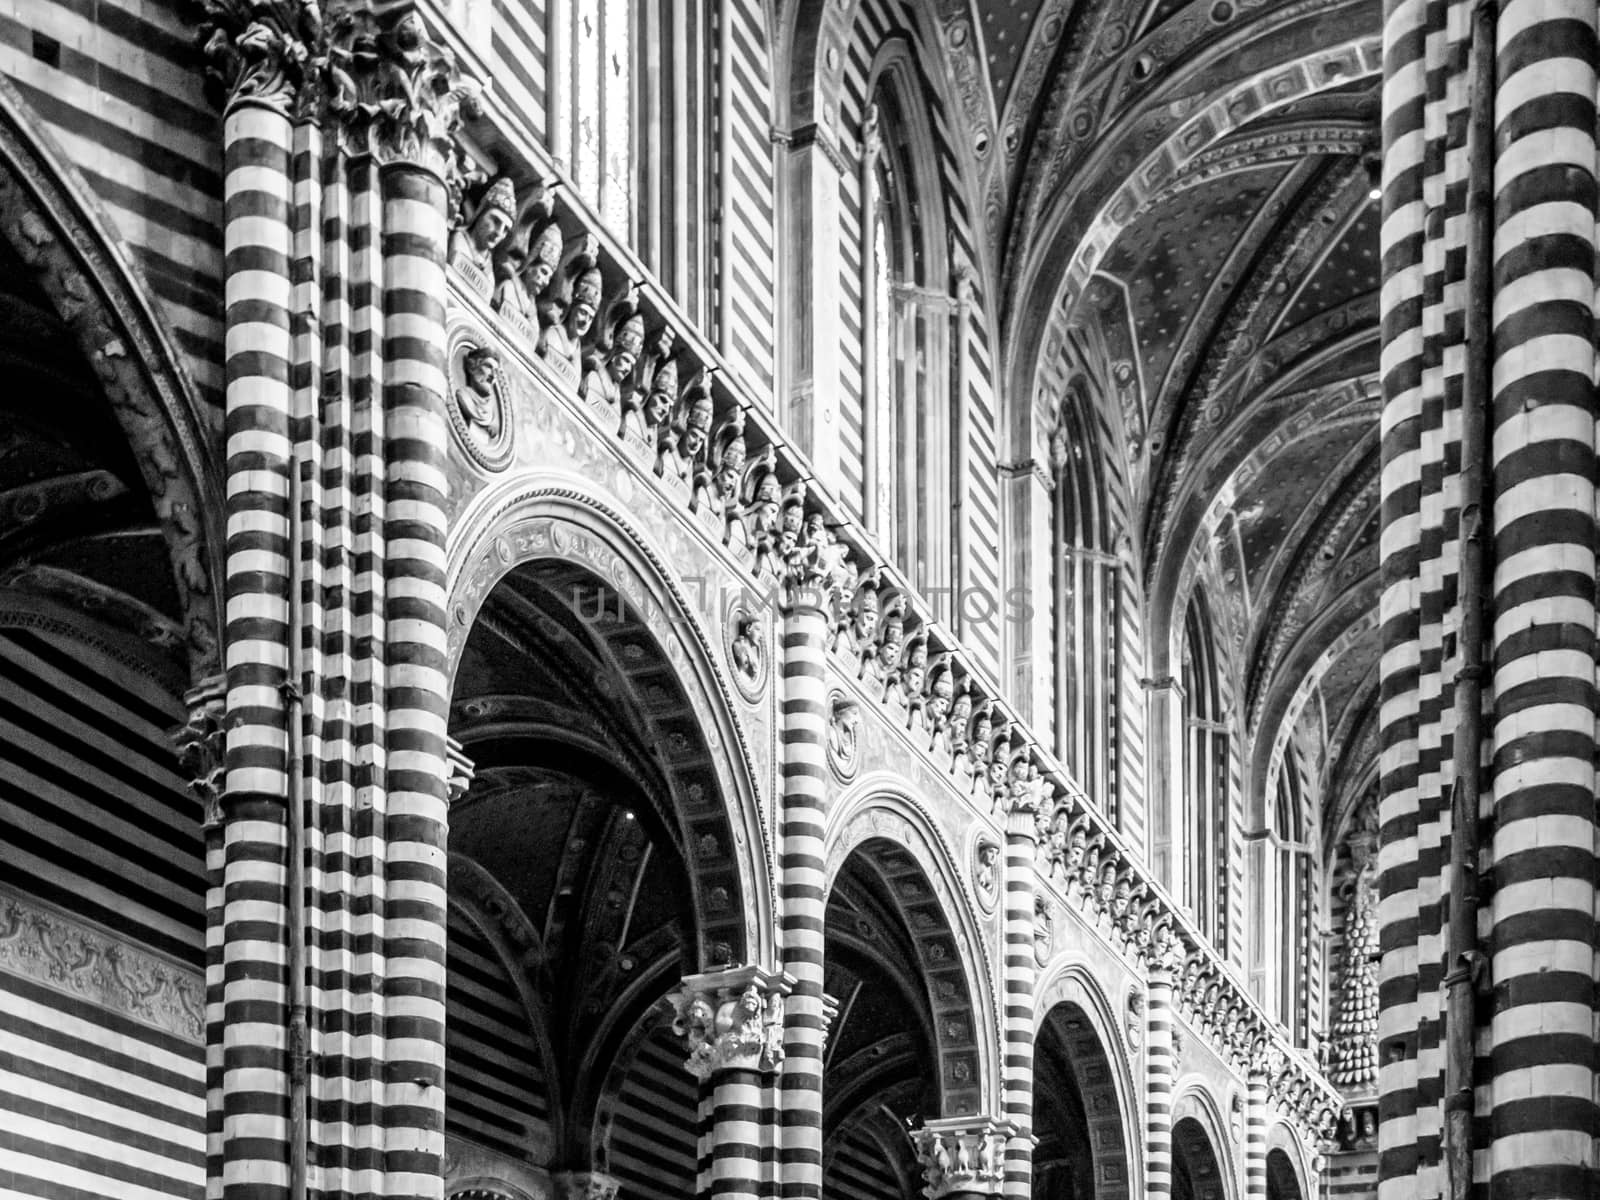 Interior of Santa Maria Assunta Cathedral, Siena, Italy. by pyty